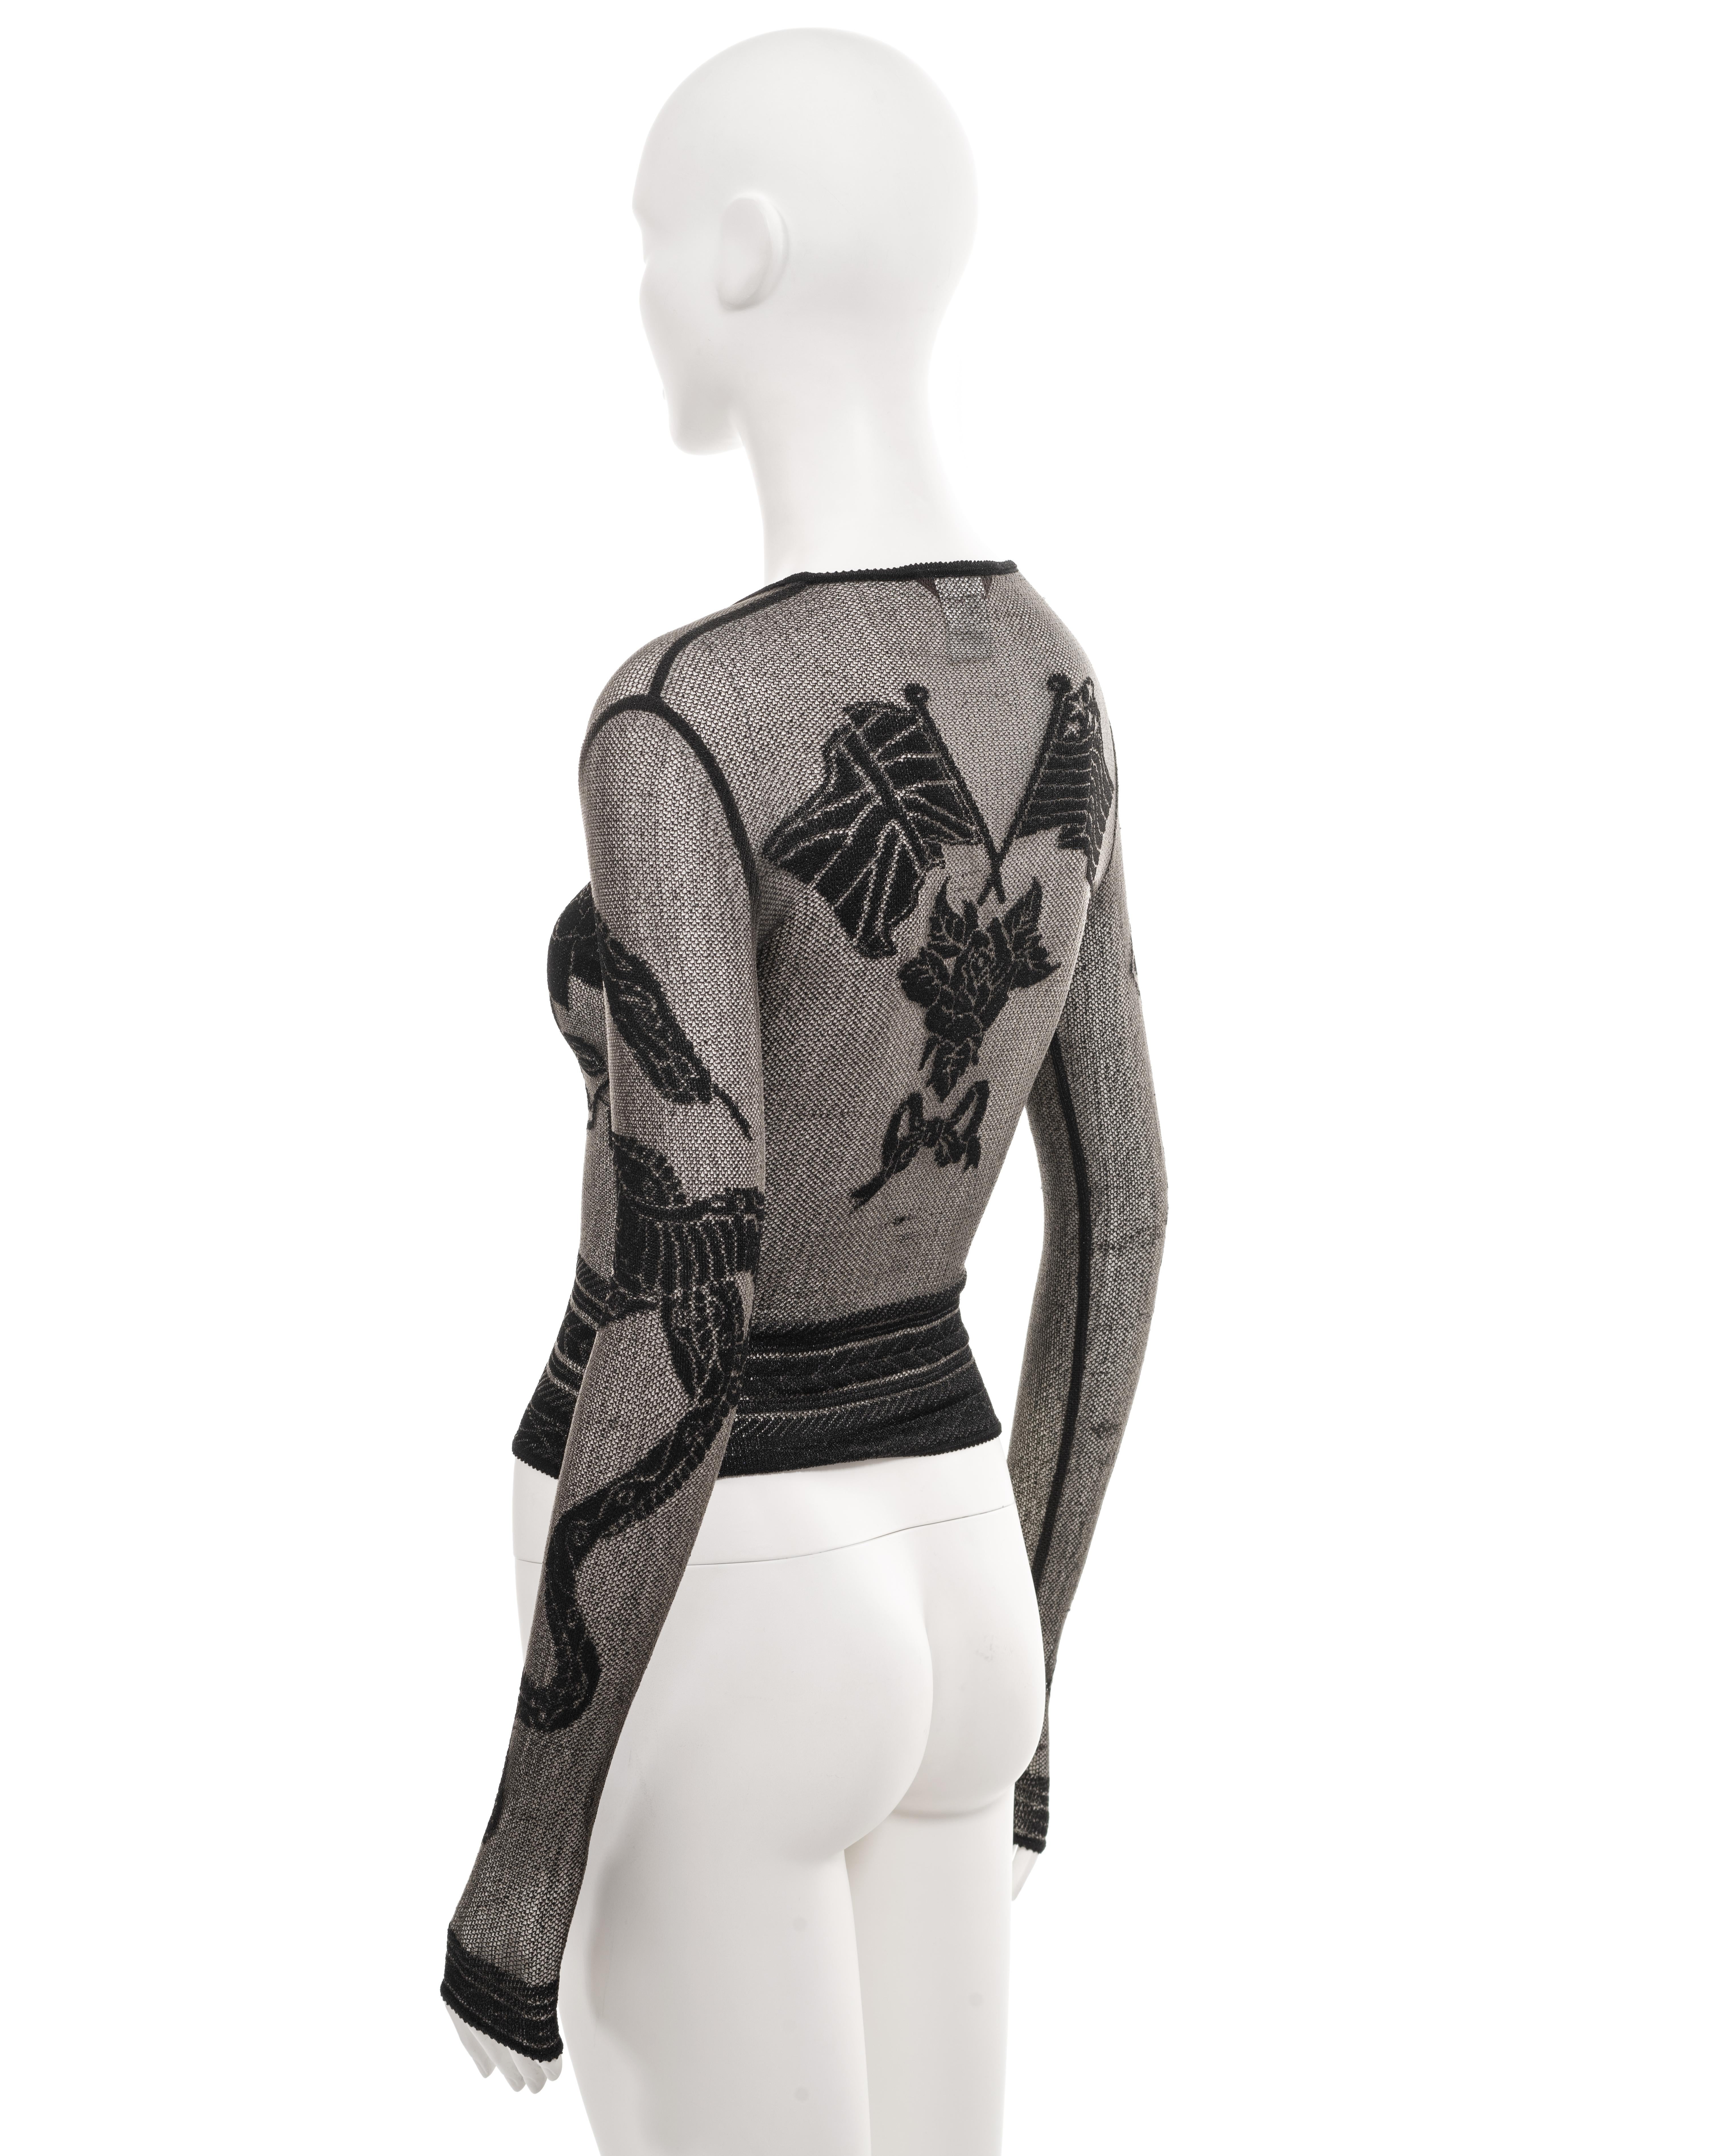 John Galliano black mesh top with tattoo motifs, fw 1997 For Sale 6